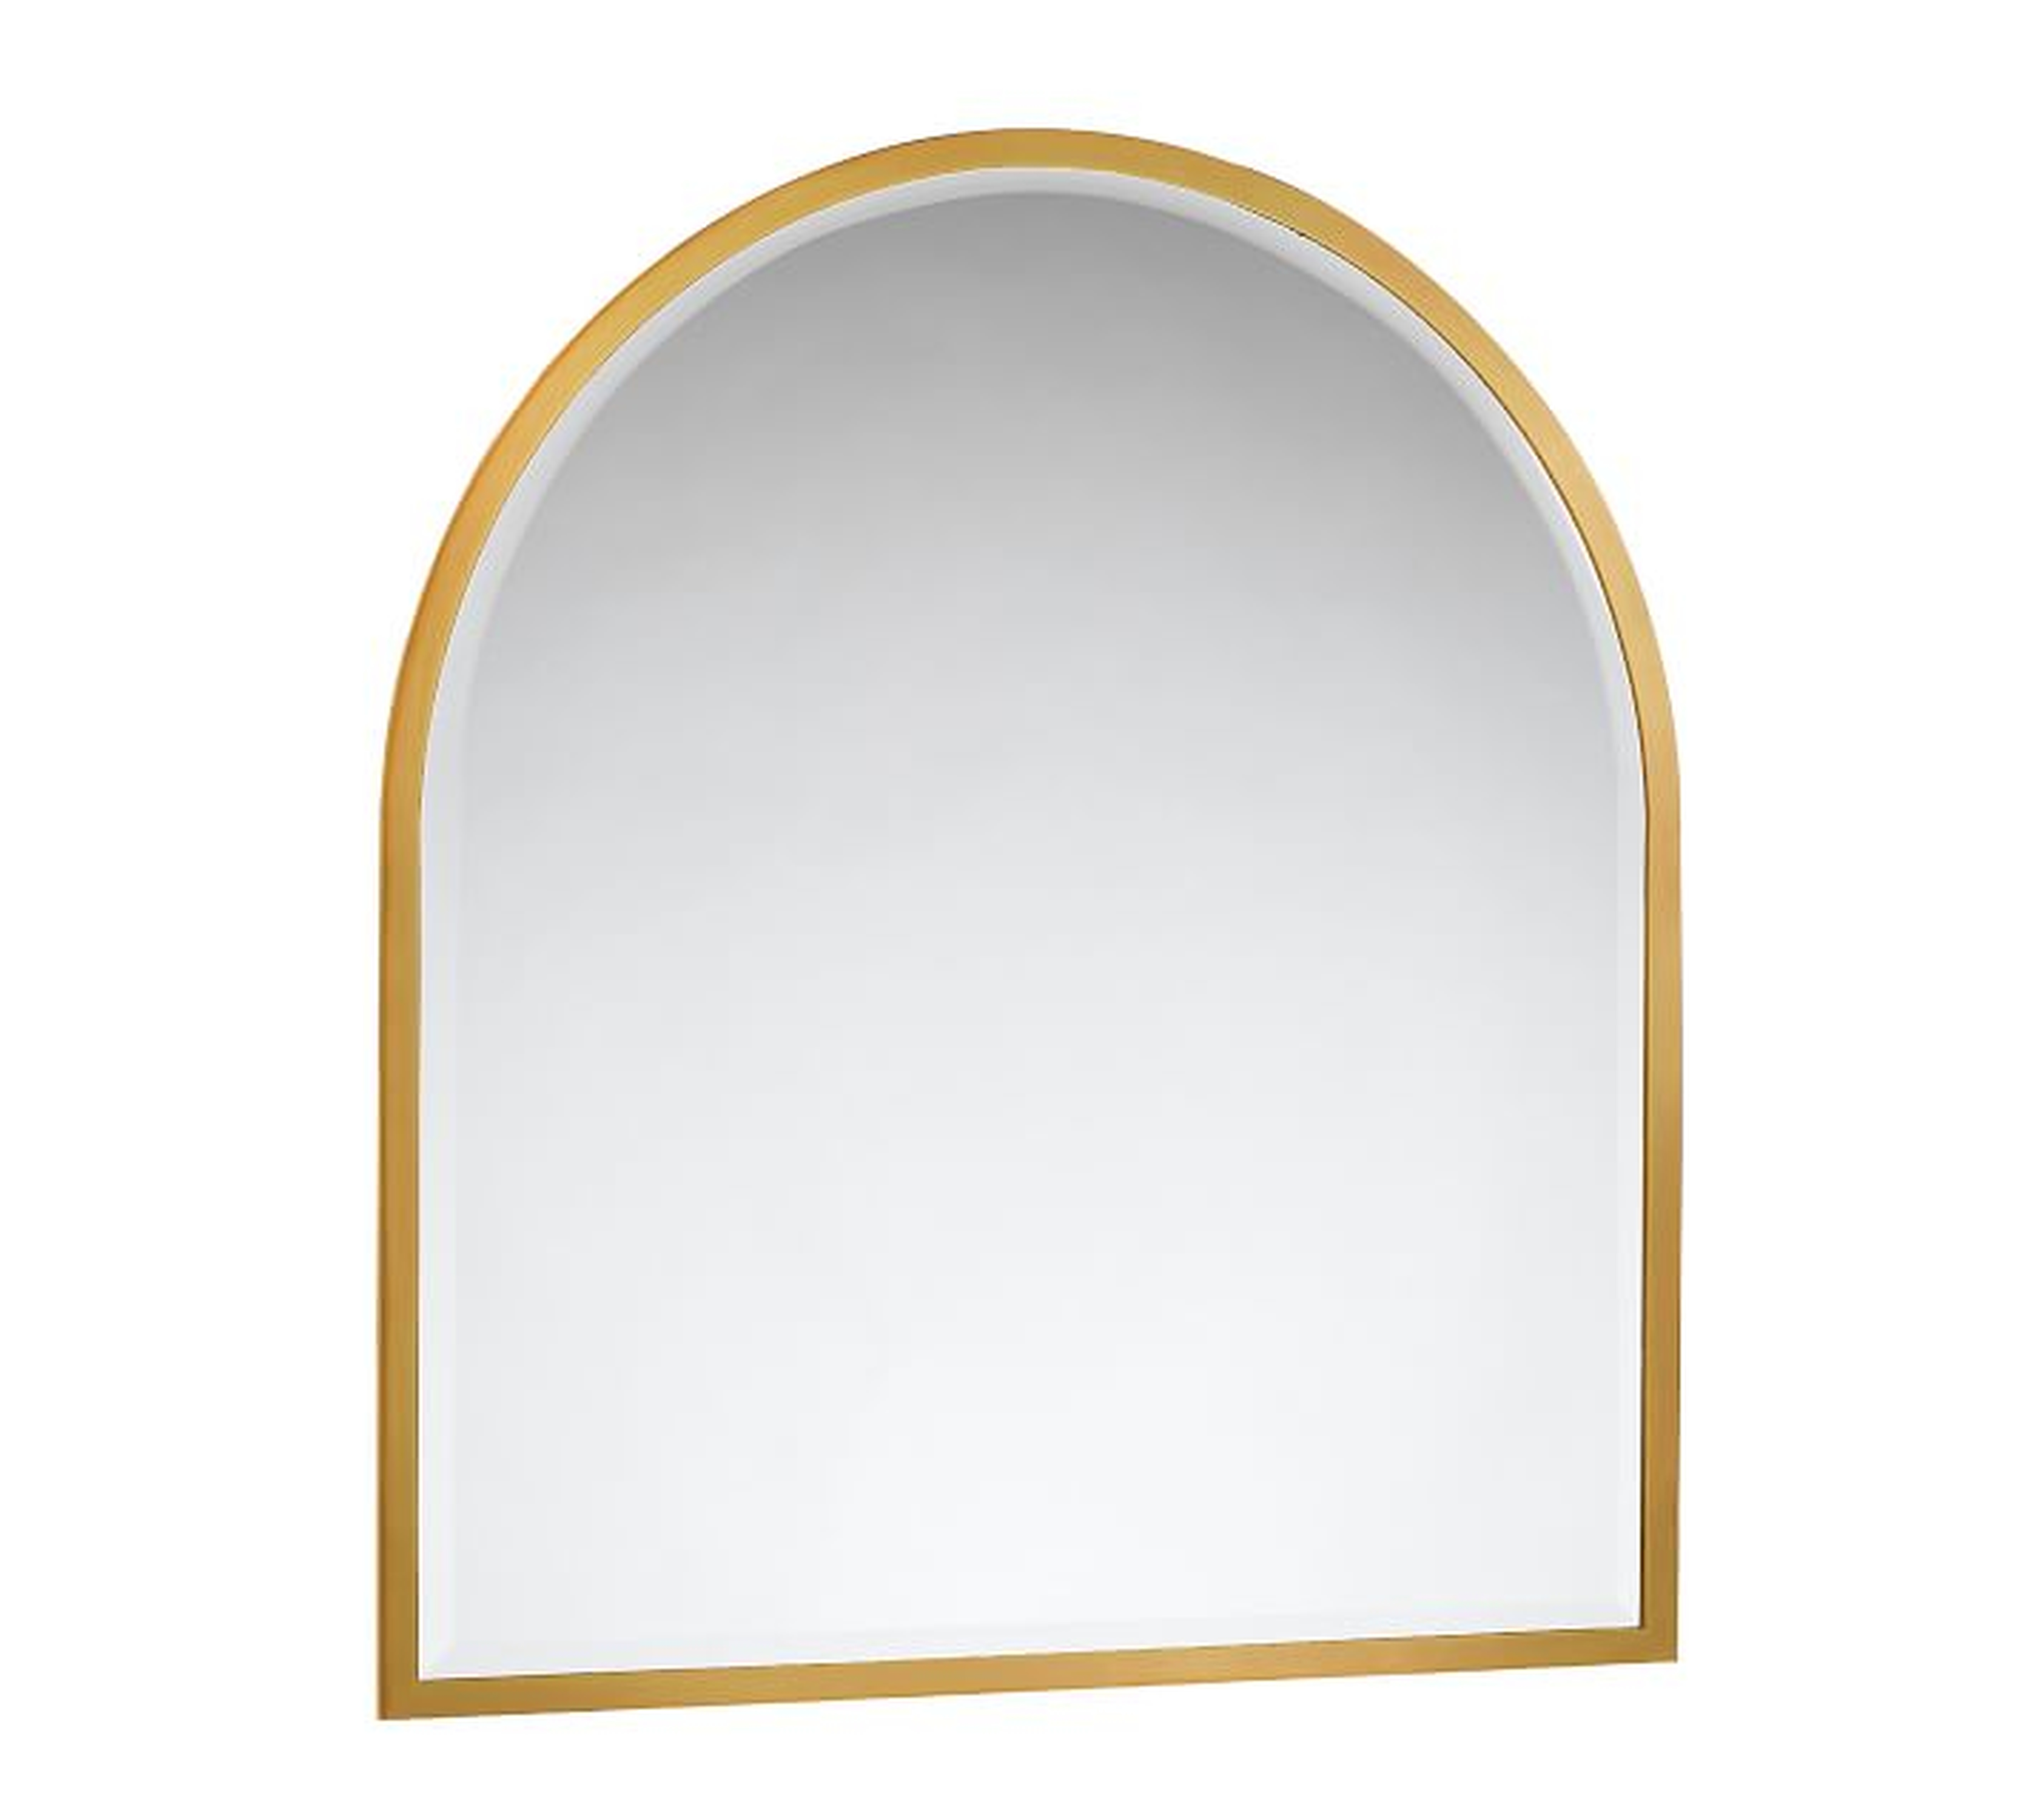 Layne Mantel Mirror, Brass, 36"W x 40"H - Pottery Barn